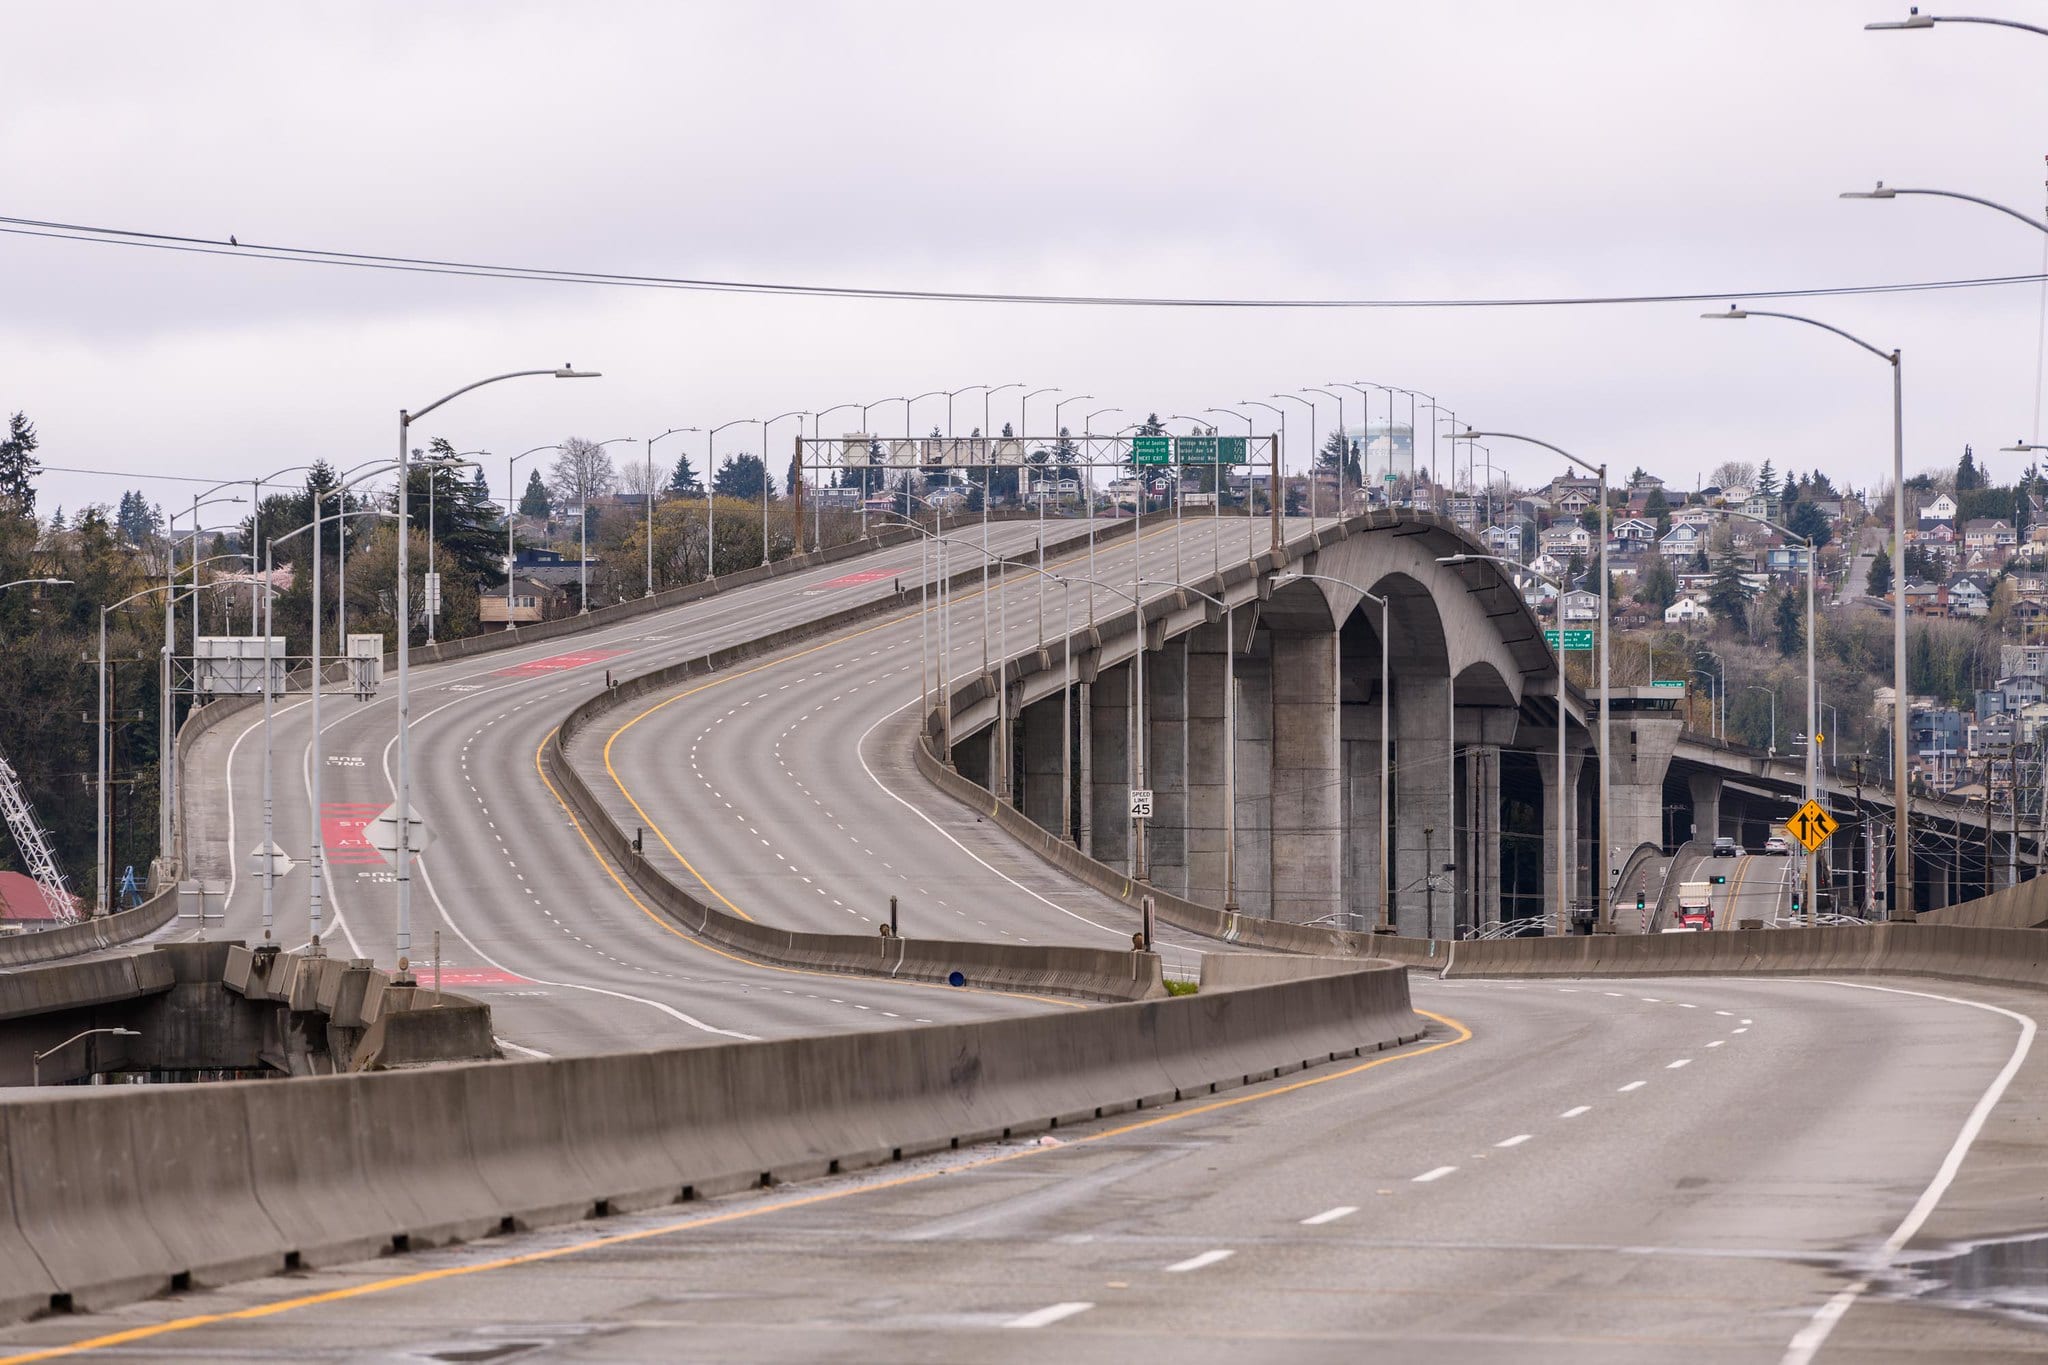 The West Seattle High-Rise Bridge